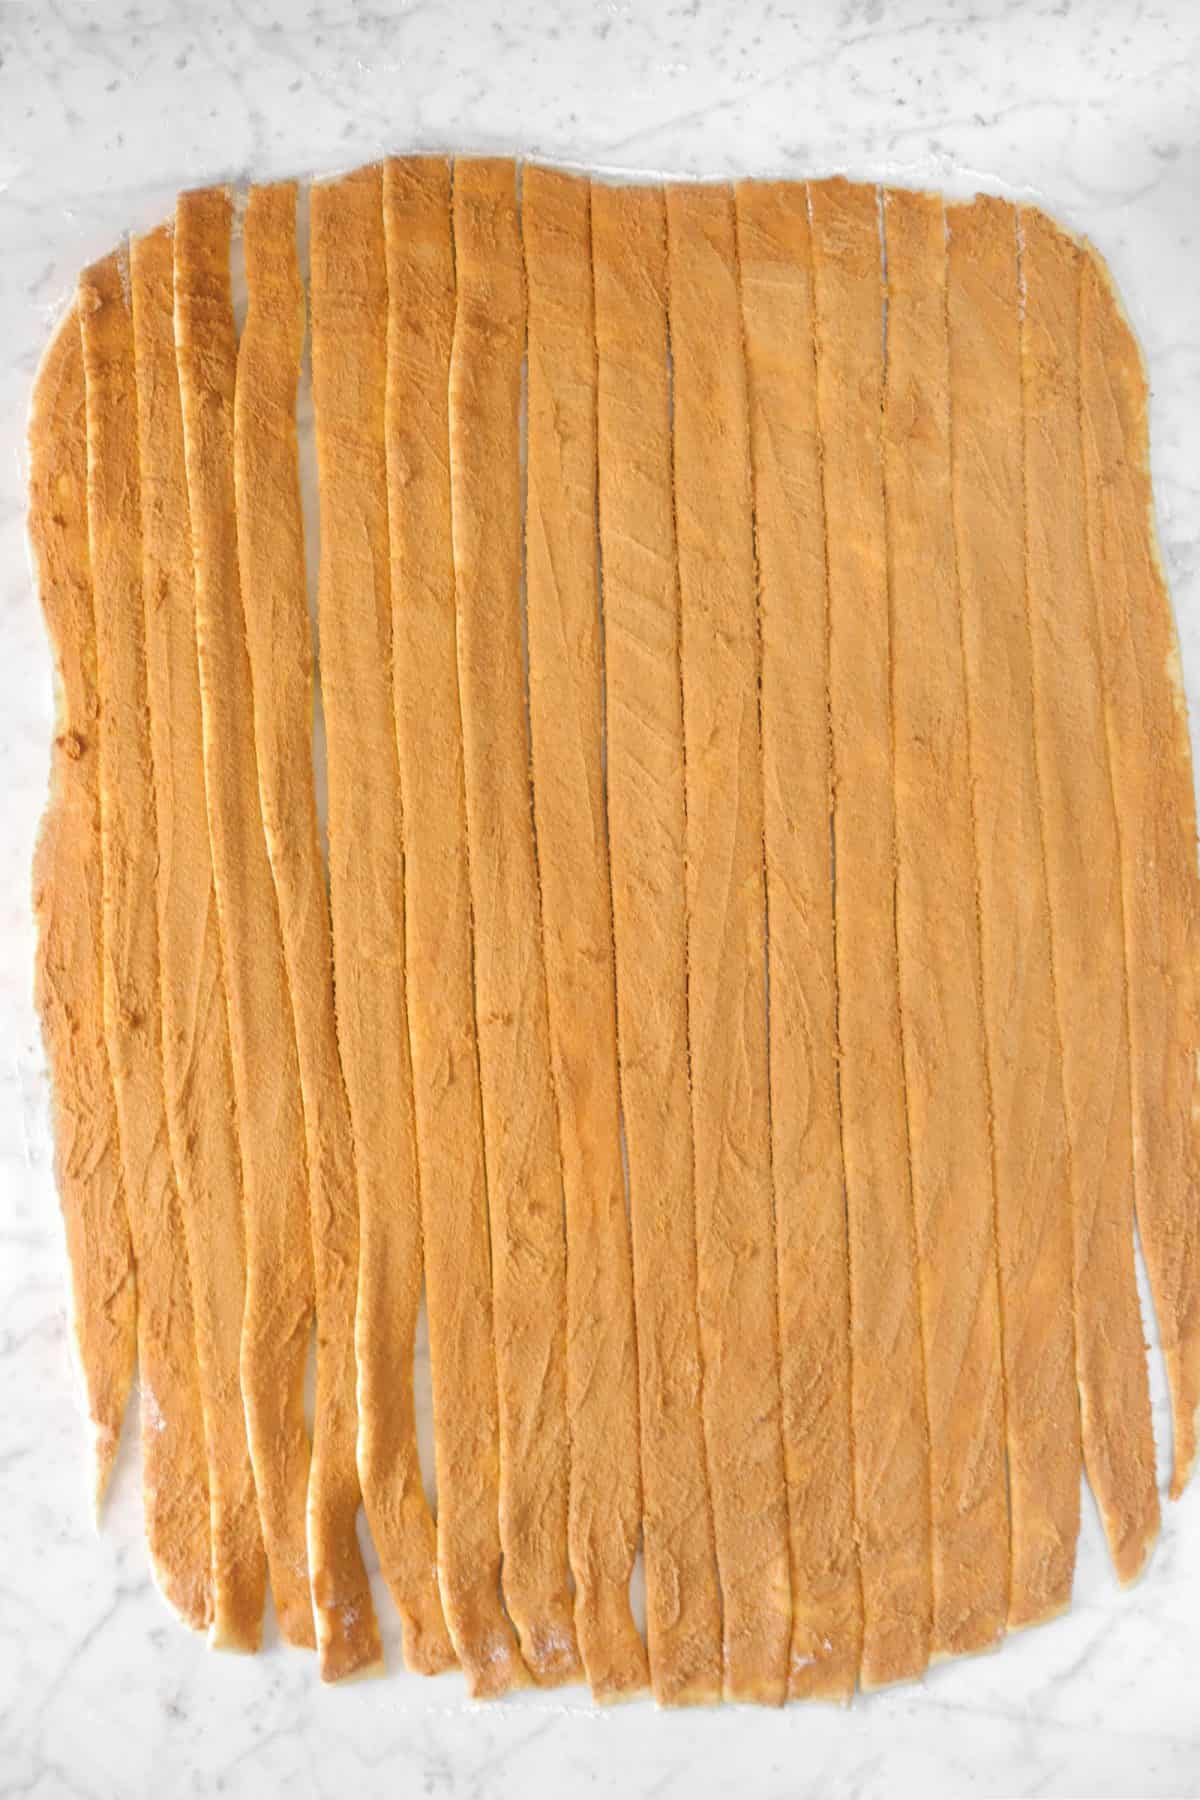 cinnamon roll dough cut into length wise strips